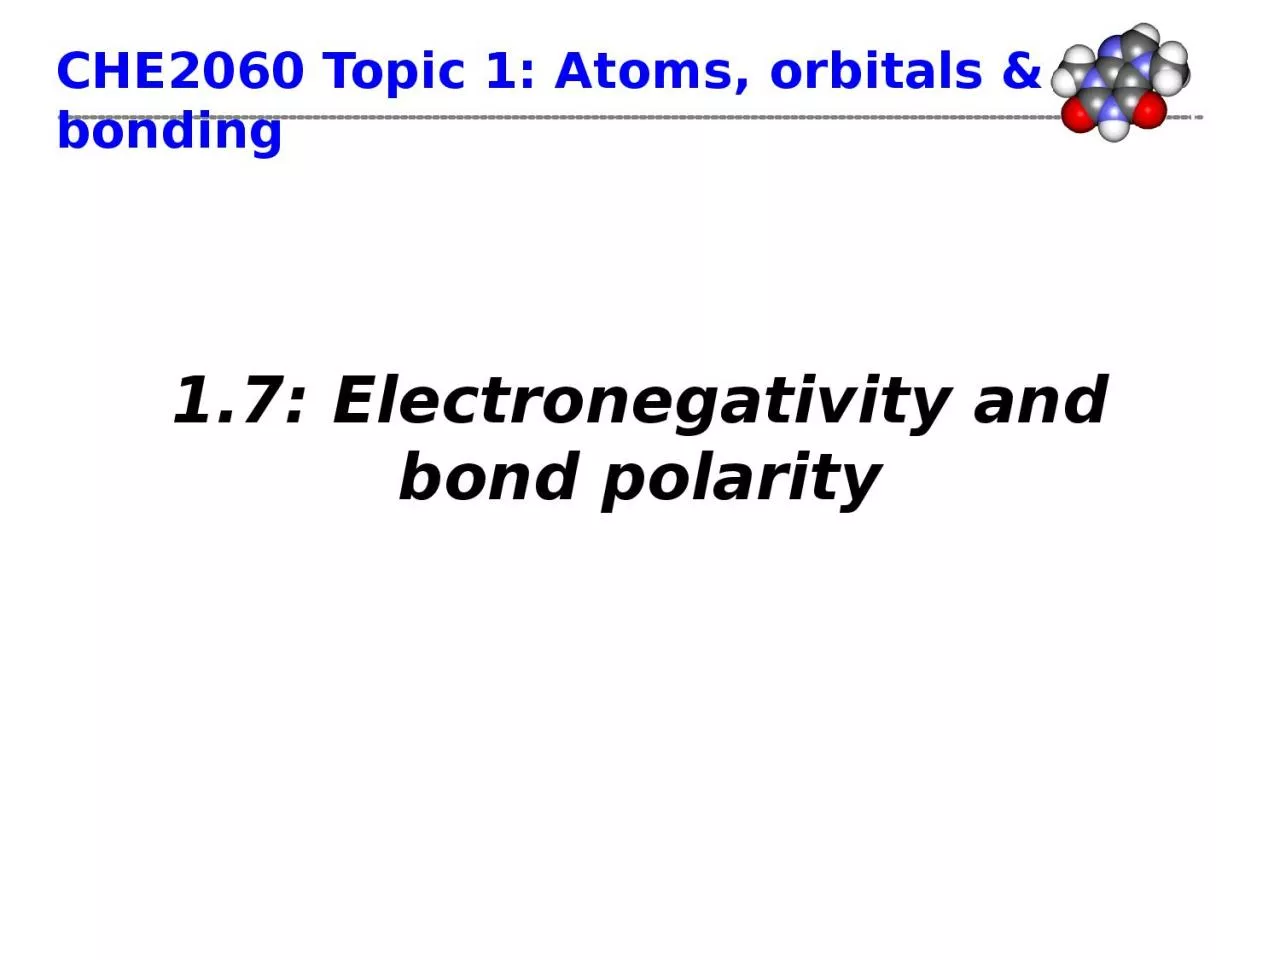 1.7: Electronegativity and bond